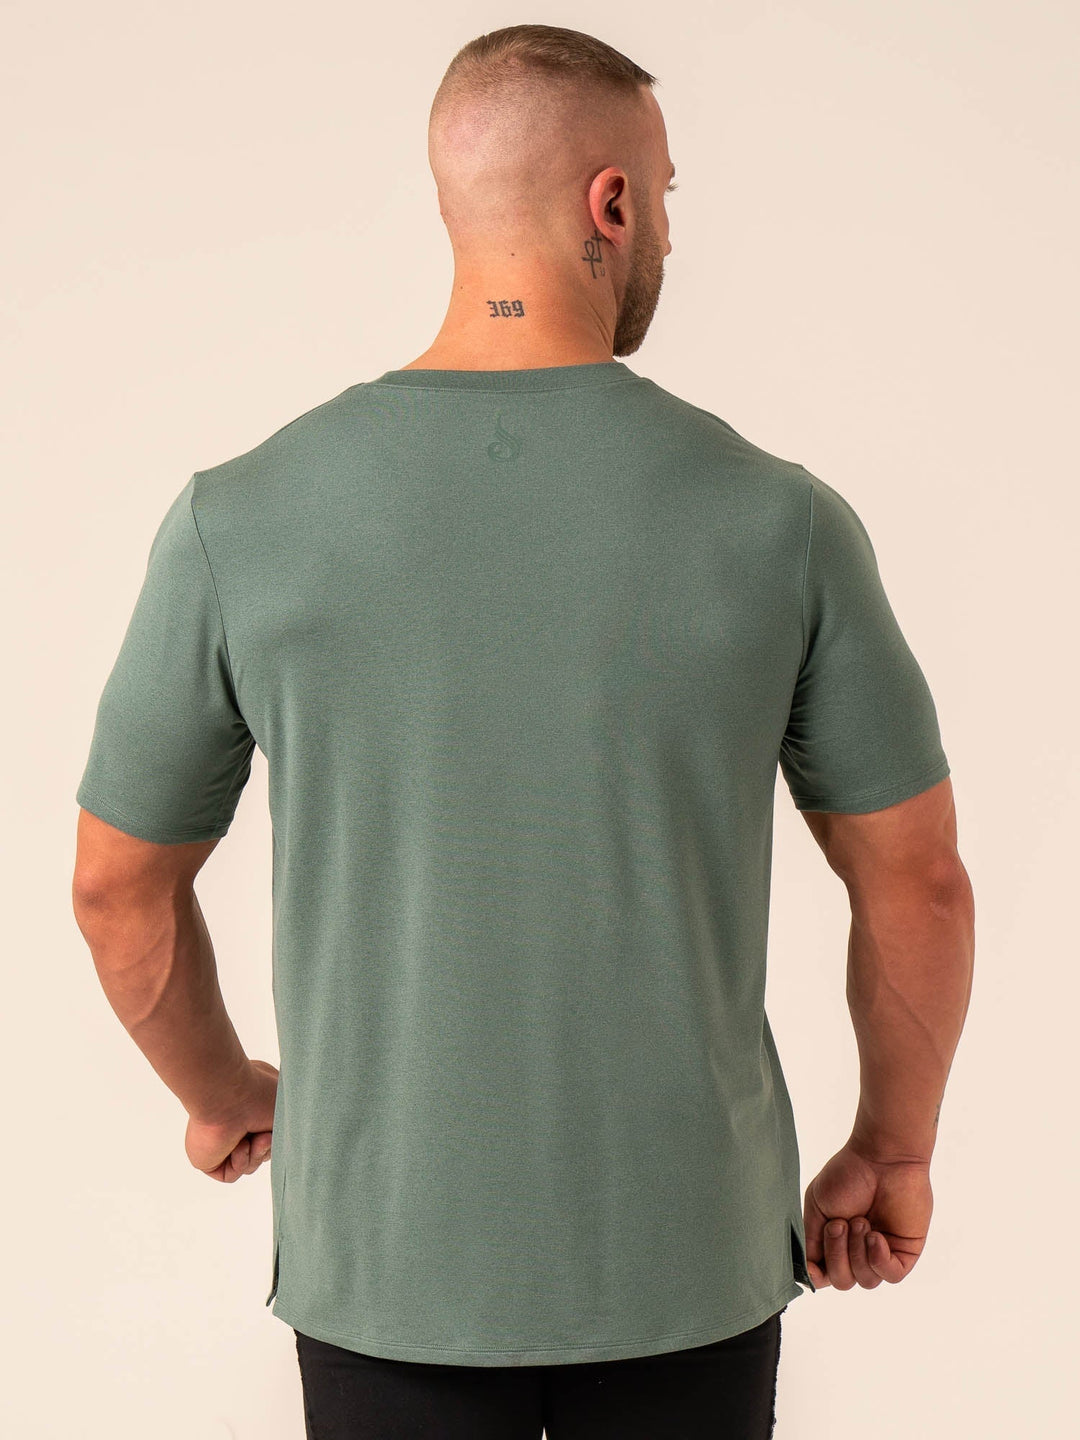 Soft Tech T-Shirt - Fern Green Marl Clothing Ryderwear 